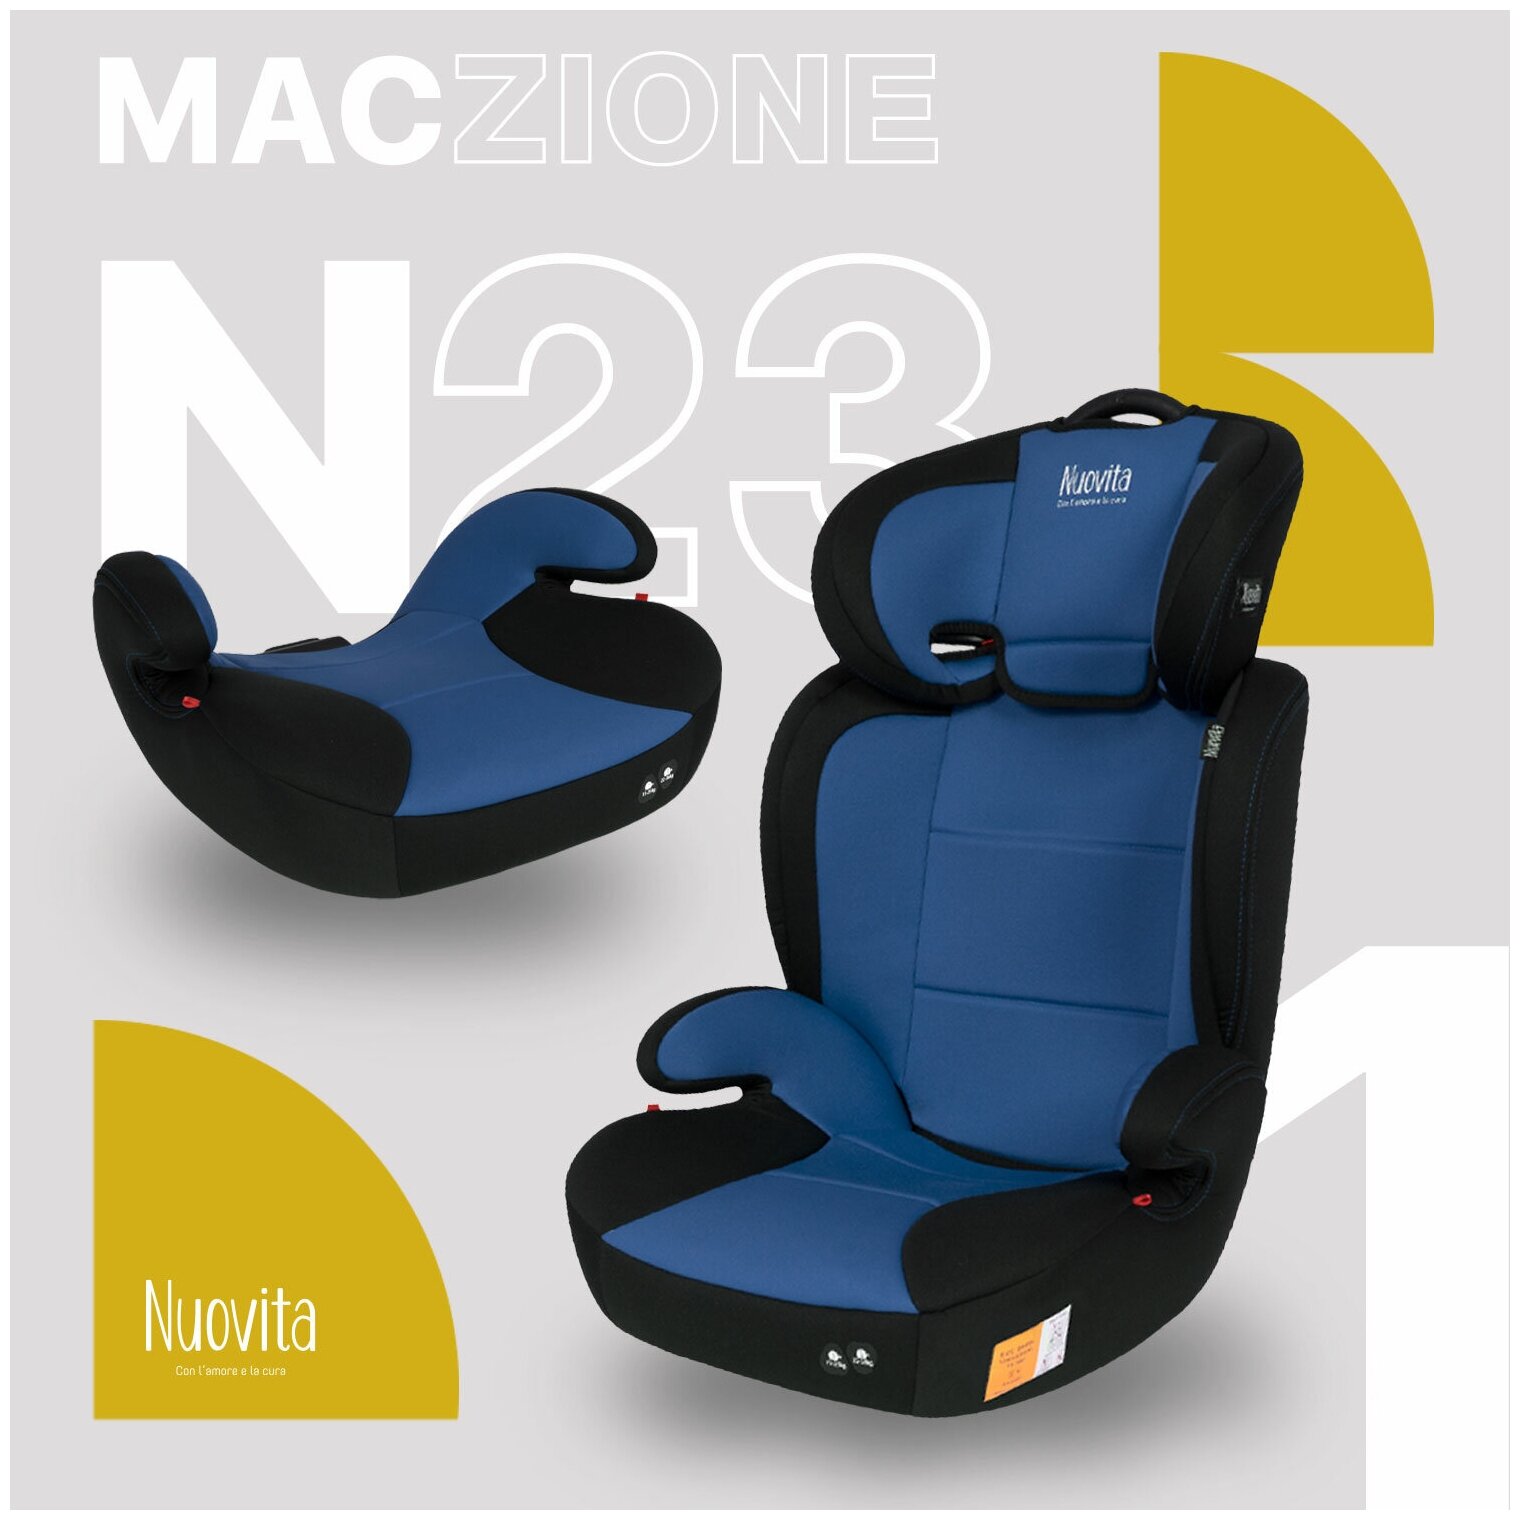 Автокресло трансформер Nuovita Maczione N23-1, группа 2/3, от 3,5 до 12 лет, от 15 до 36 кг (Blu/Синий)